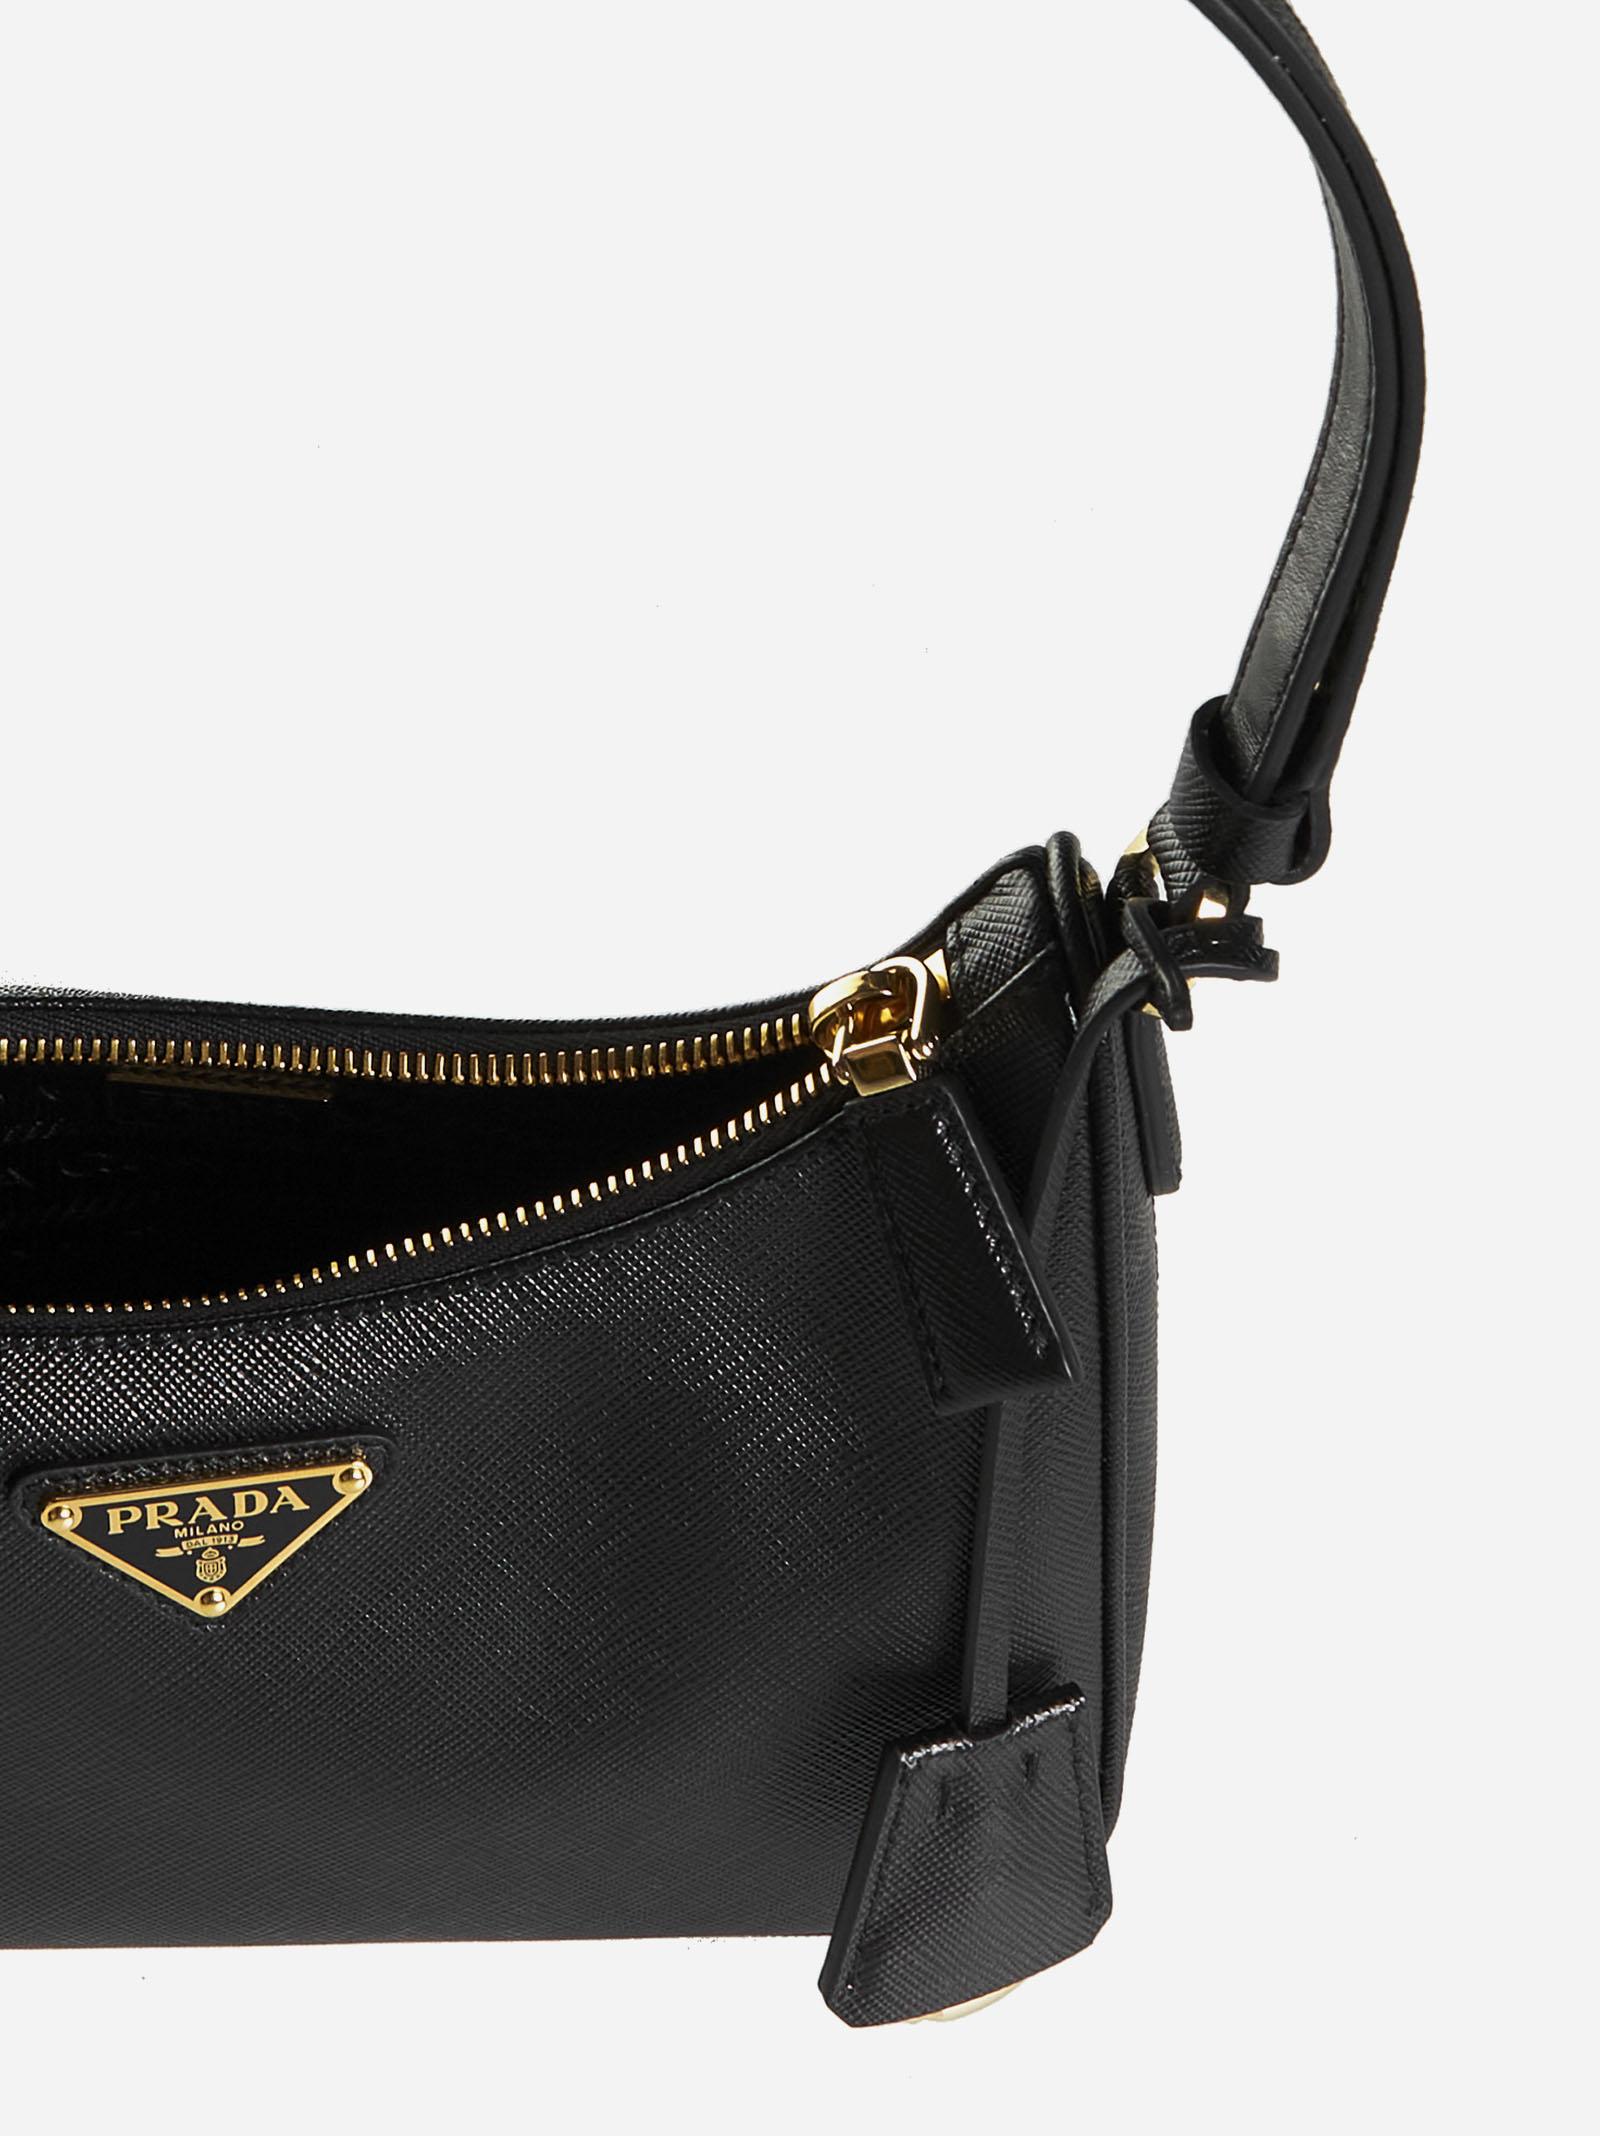 Prada Saffiano Leather Mini Bag in Black | Lyst